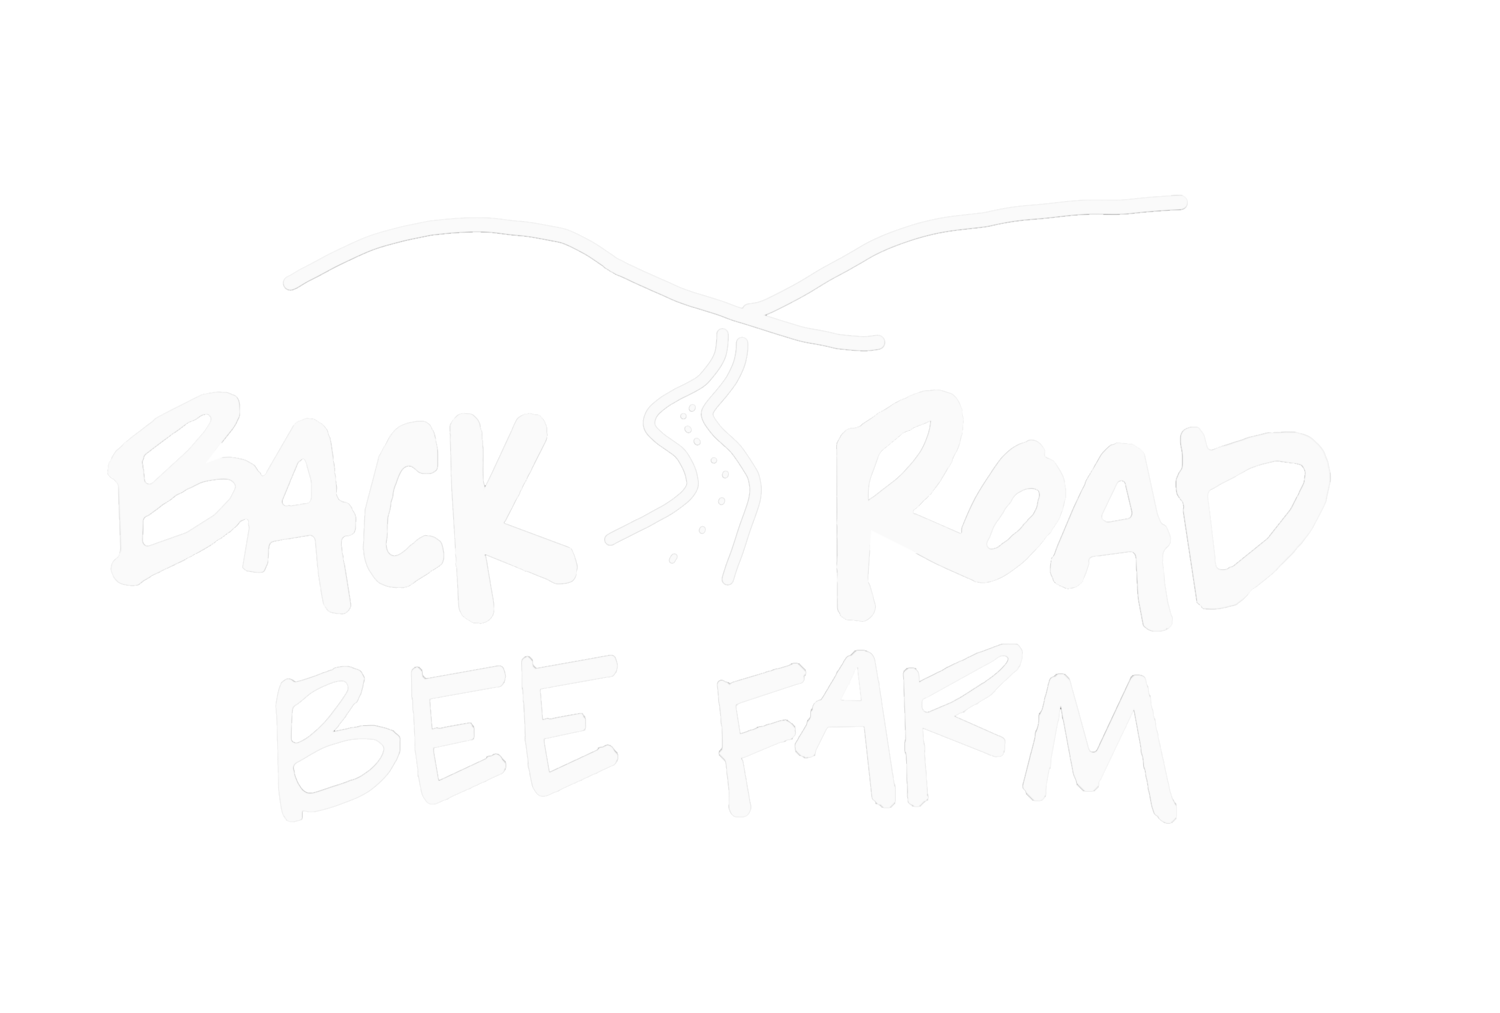 Back Road Bee Farm